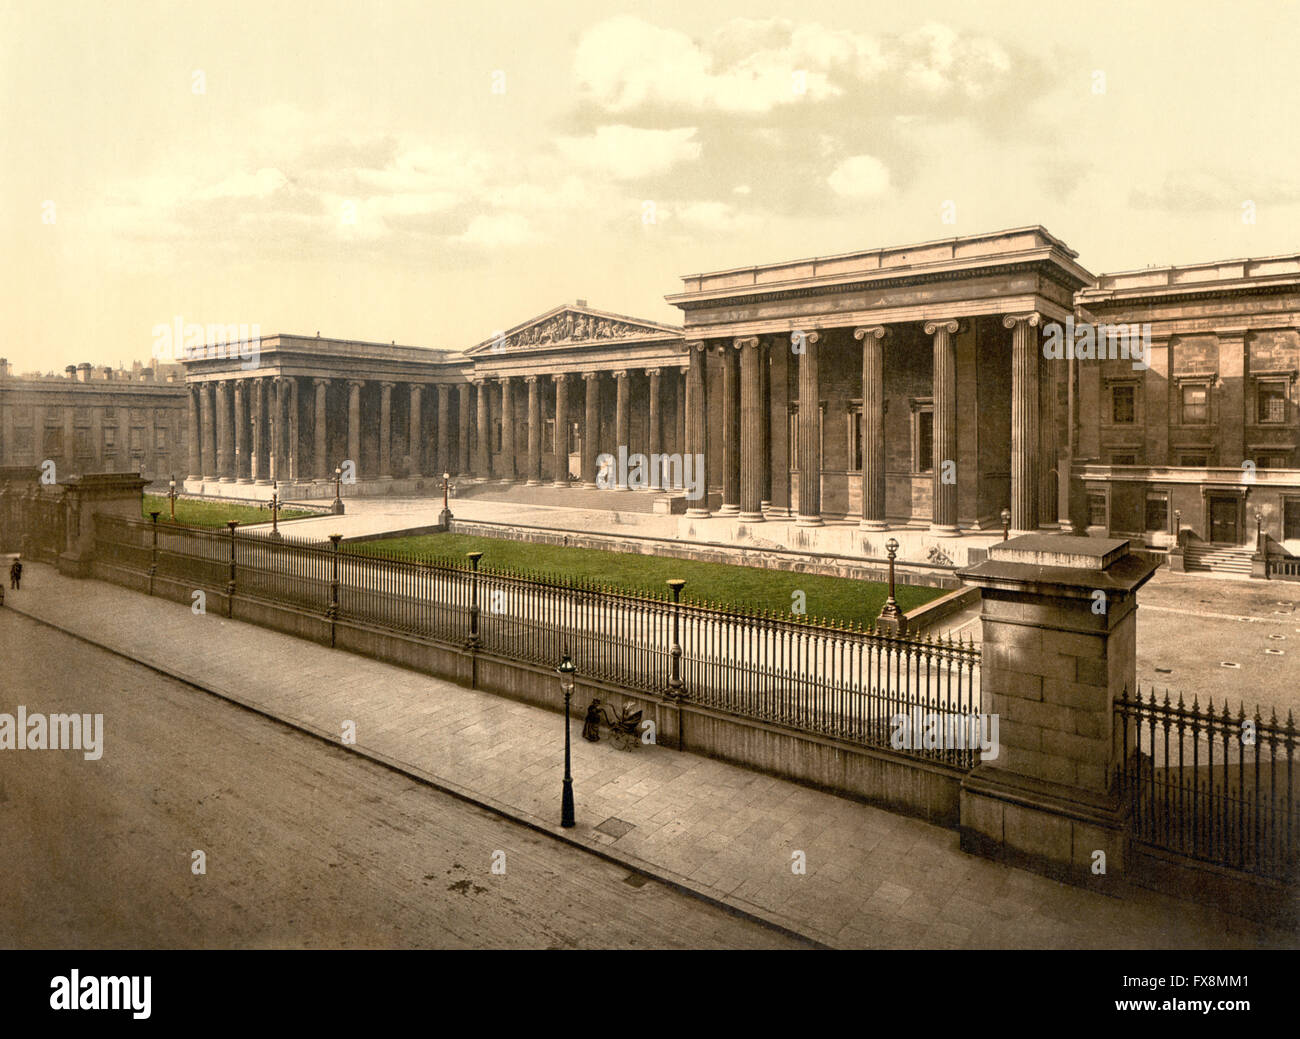 British Museum, Londres, Angleterre, Royaume-Uni, impression Photochrome, vers 1900 Banque D'Images